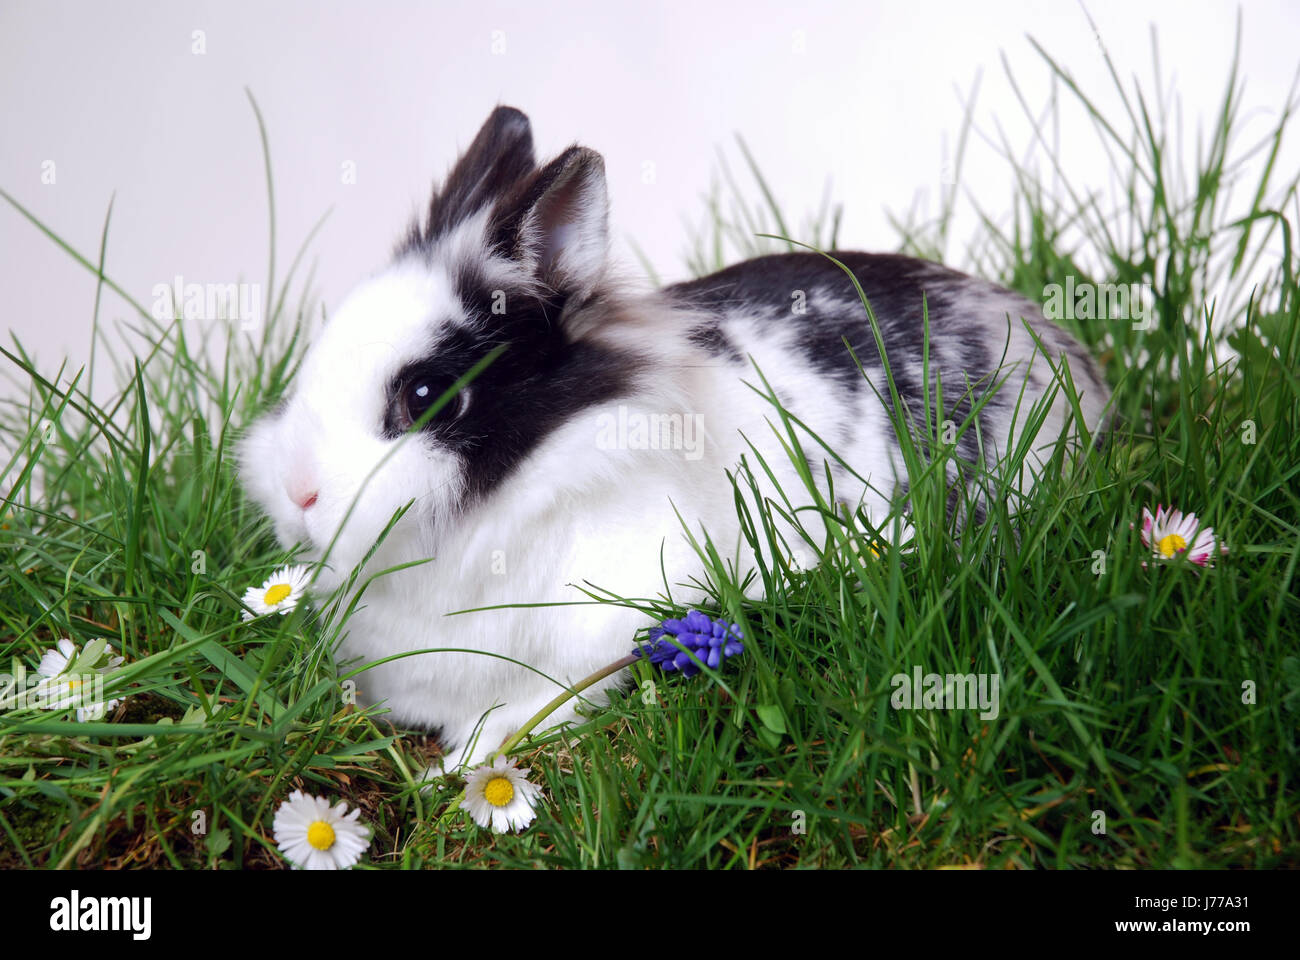 animal pet easter rabbit rabbits studio photography flower plant animals black Stock Photo